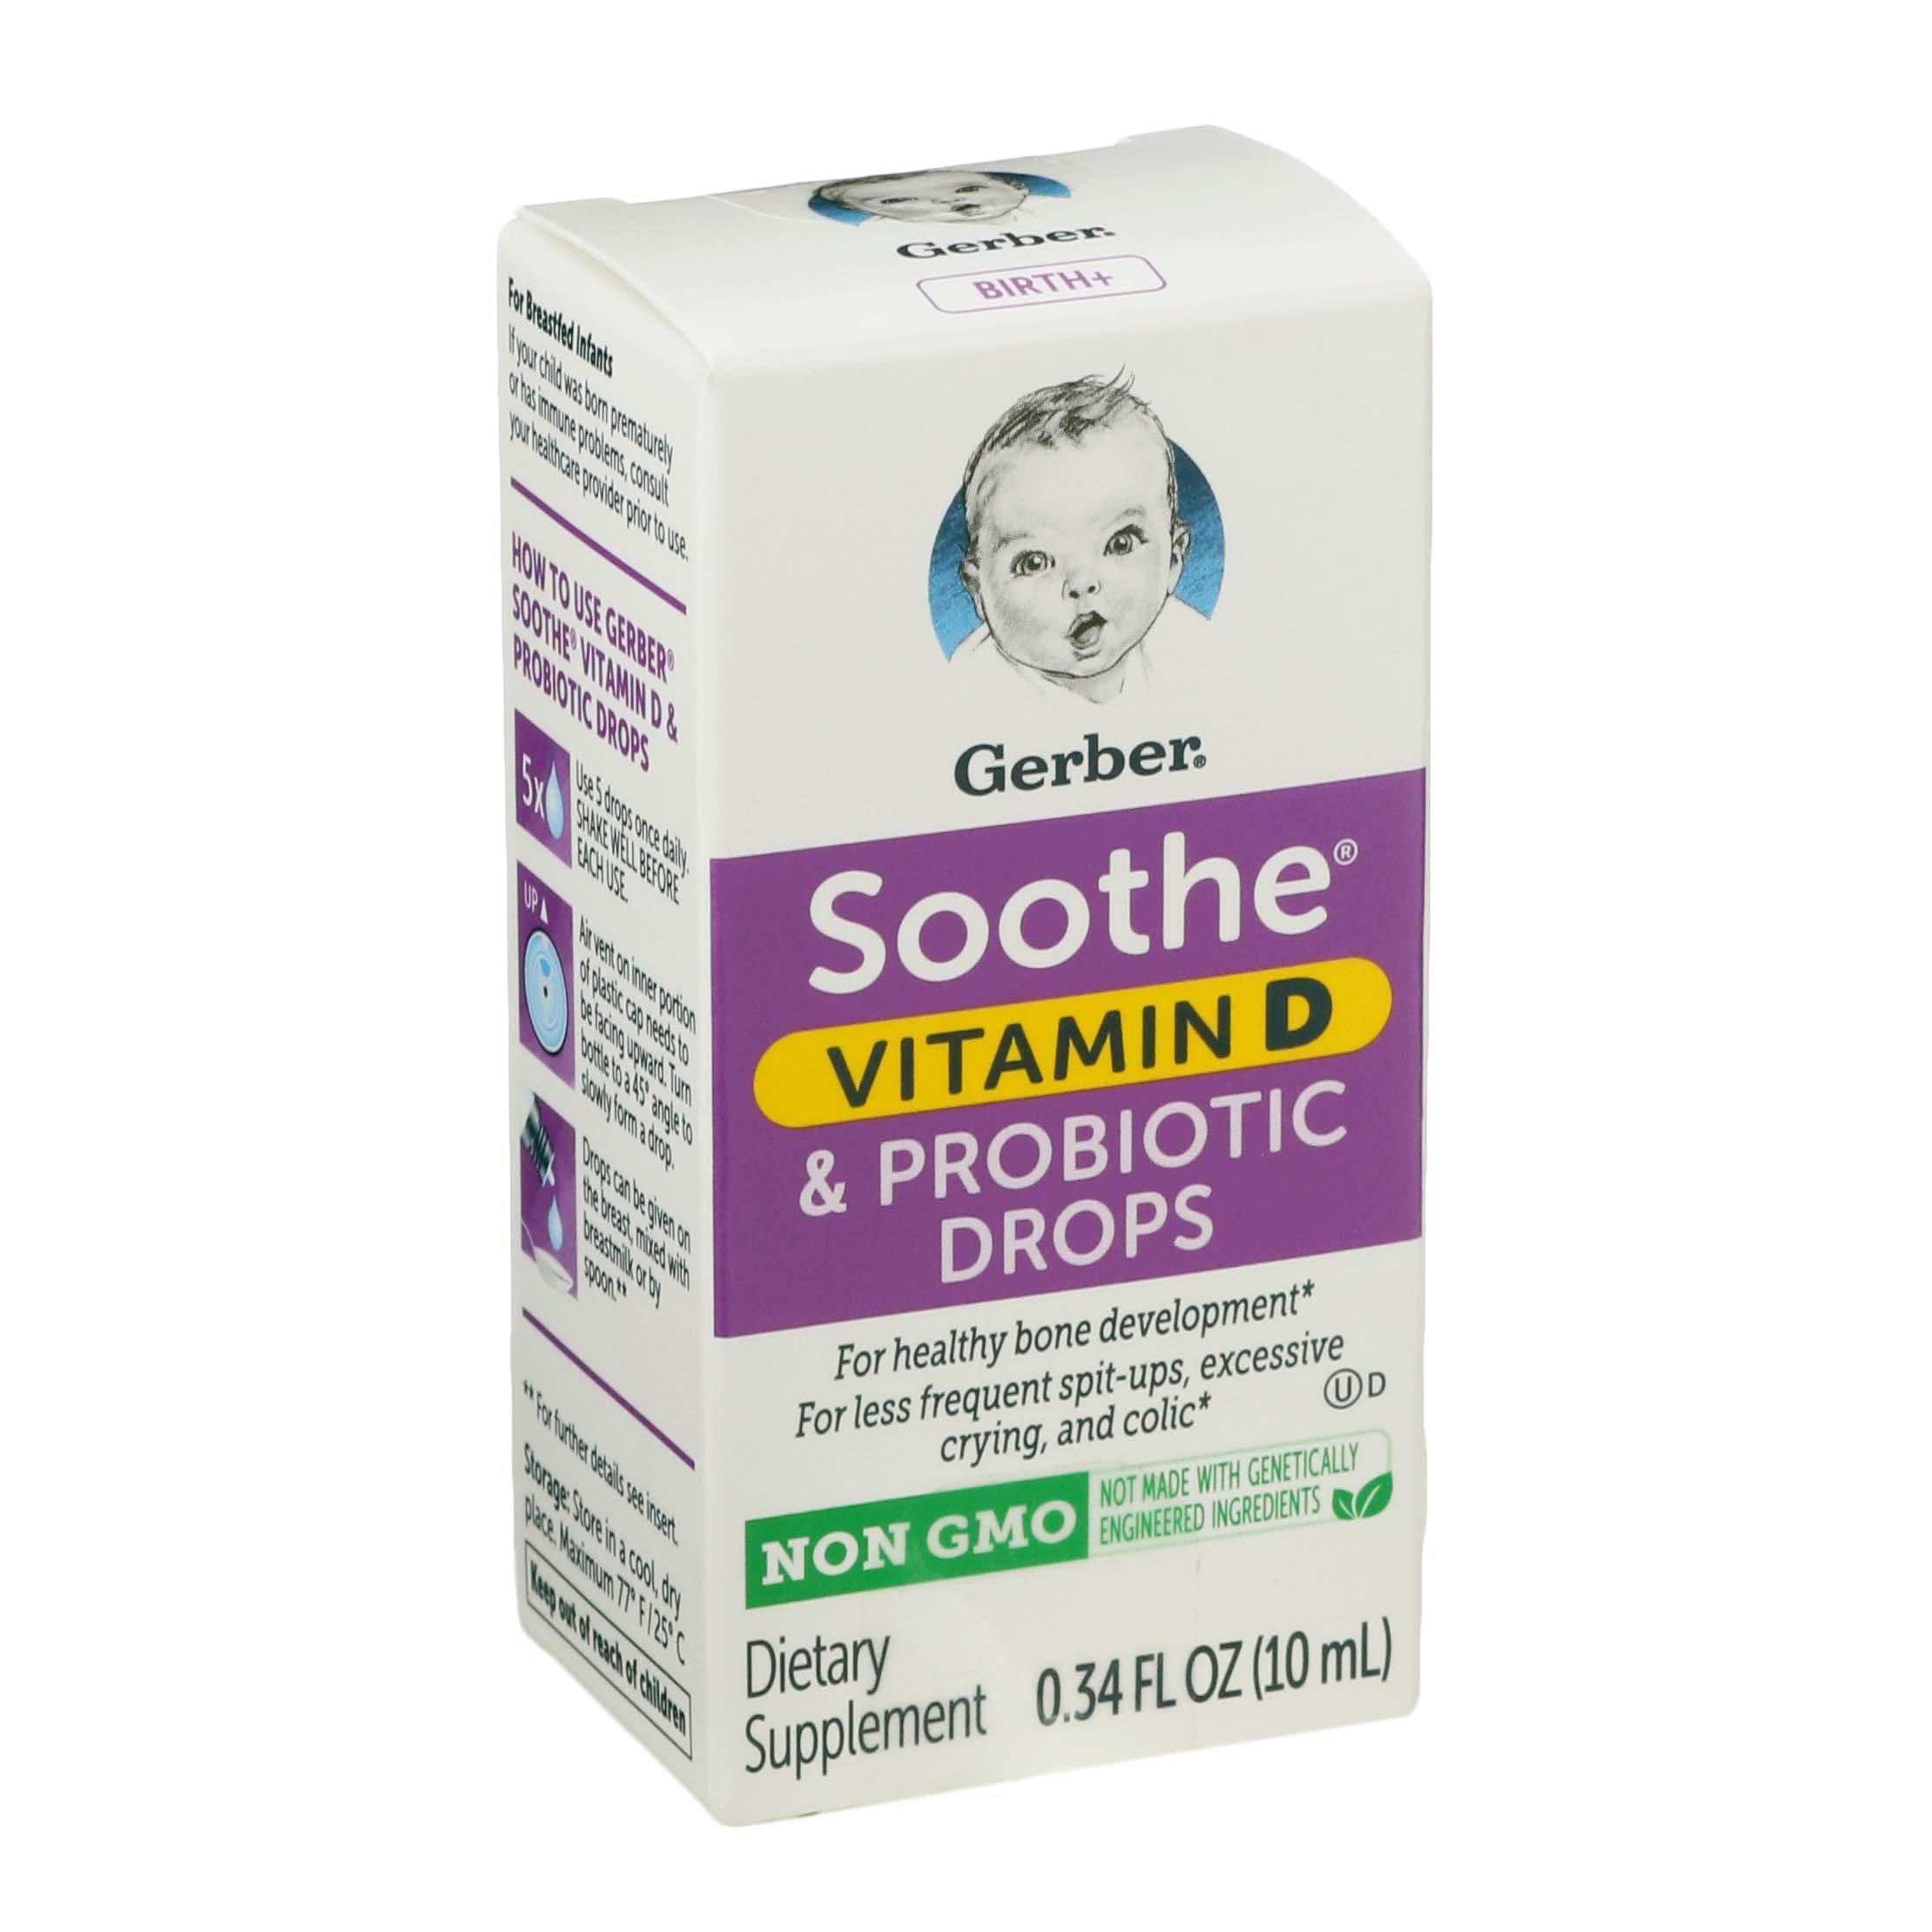 gerber soothe probiotic formula